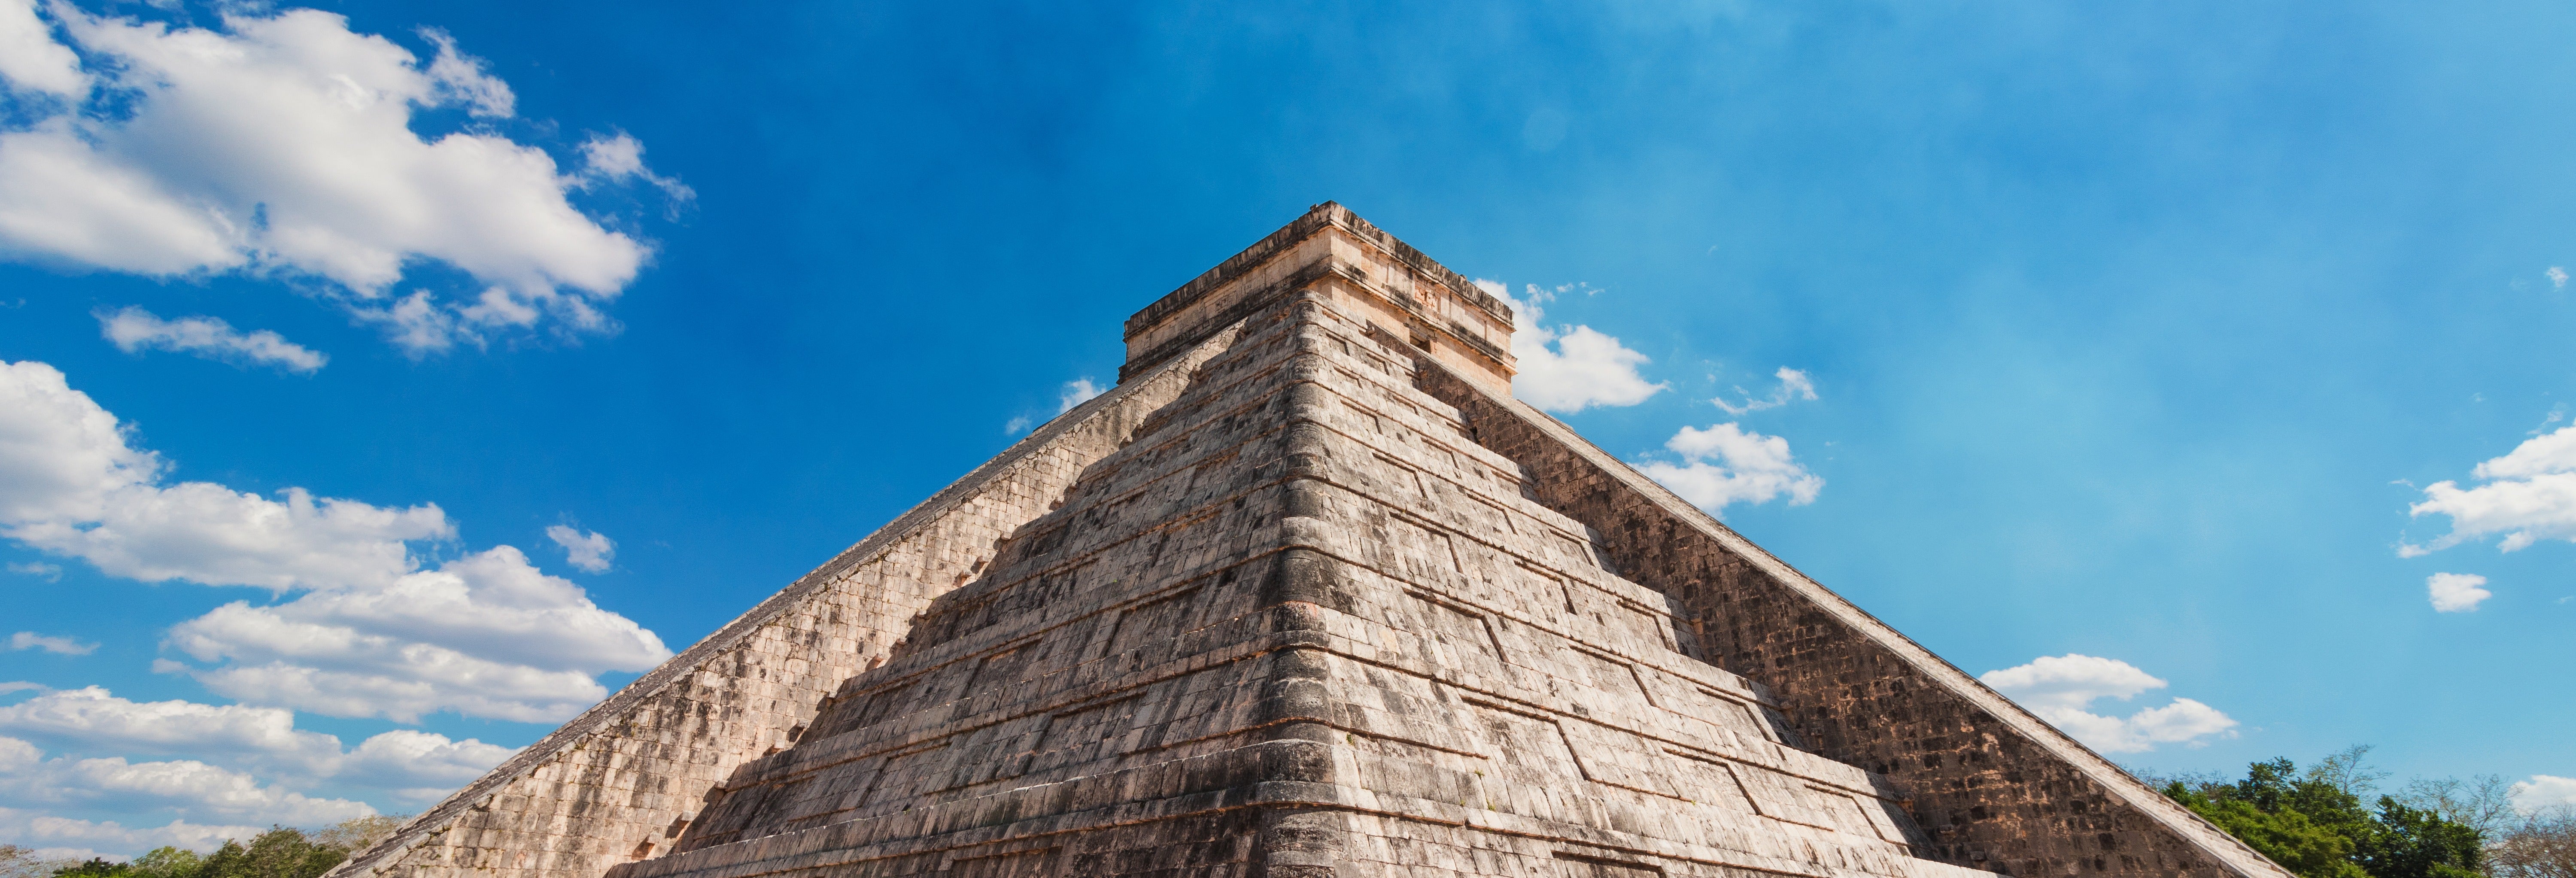 Excursão a Chichén Itzá e cenote Xcajum